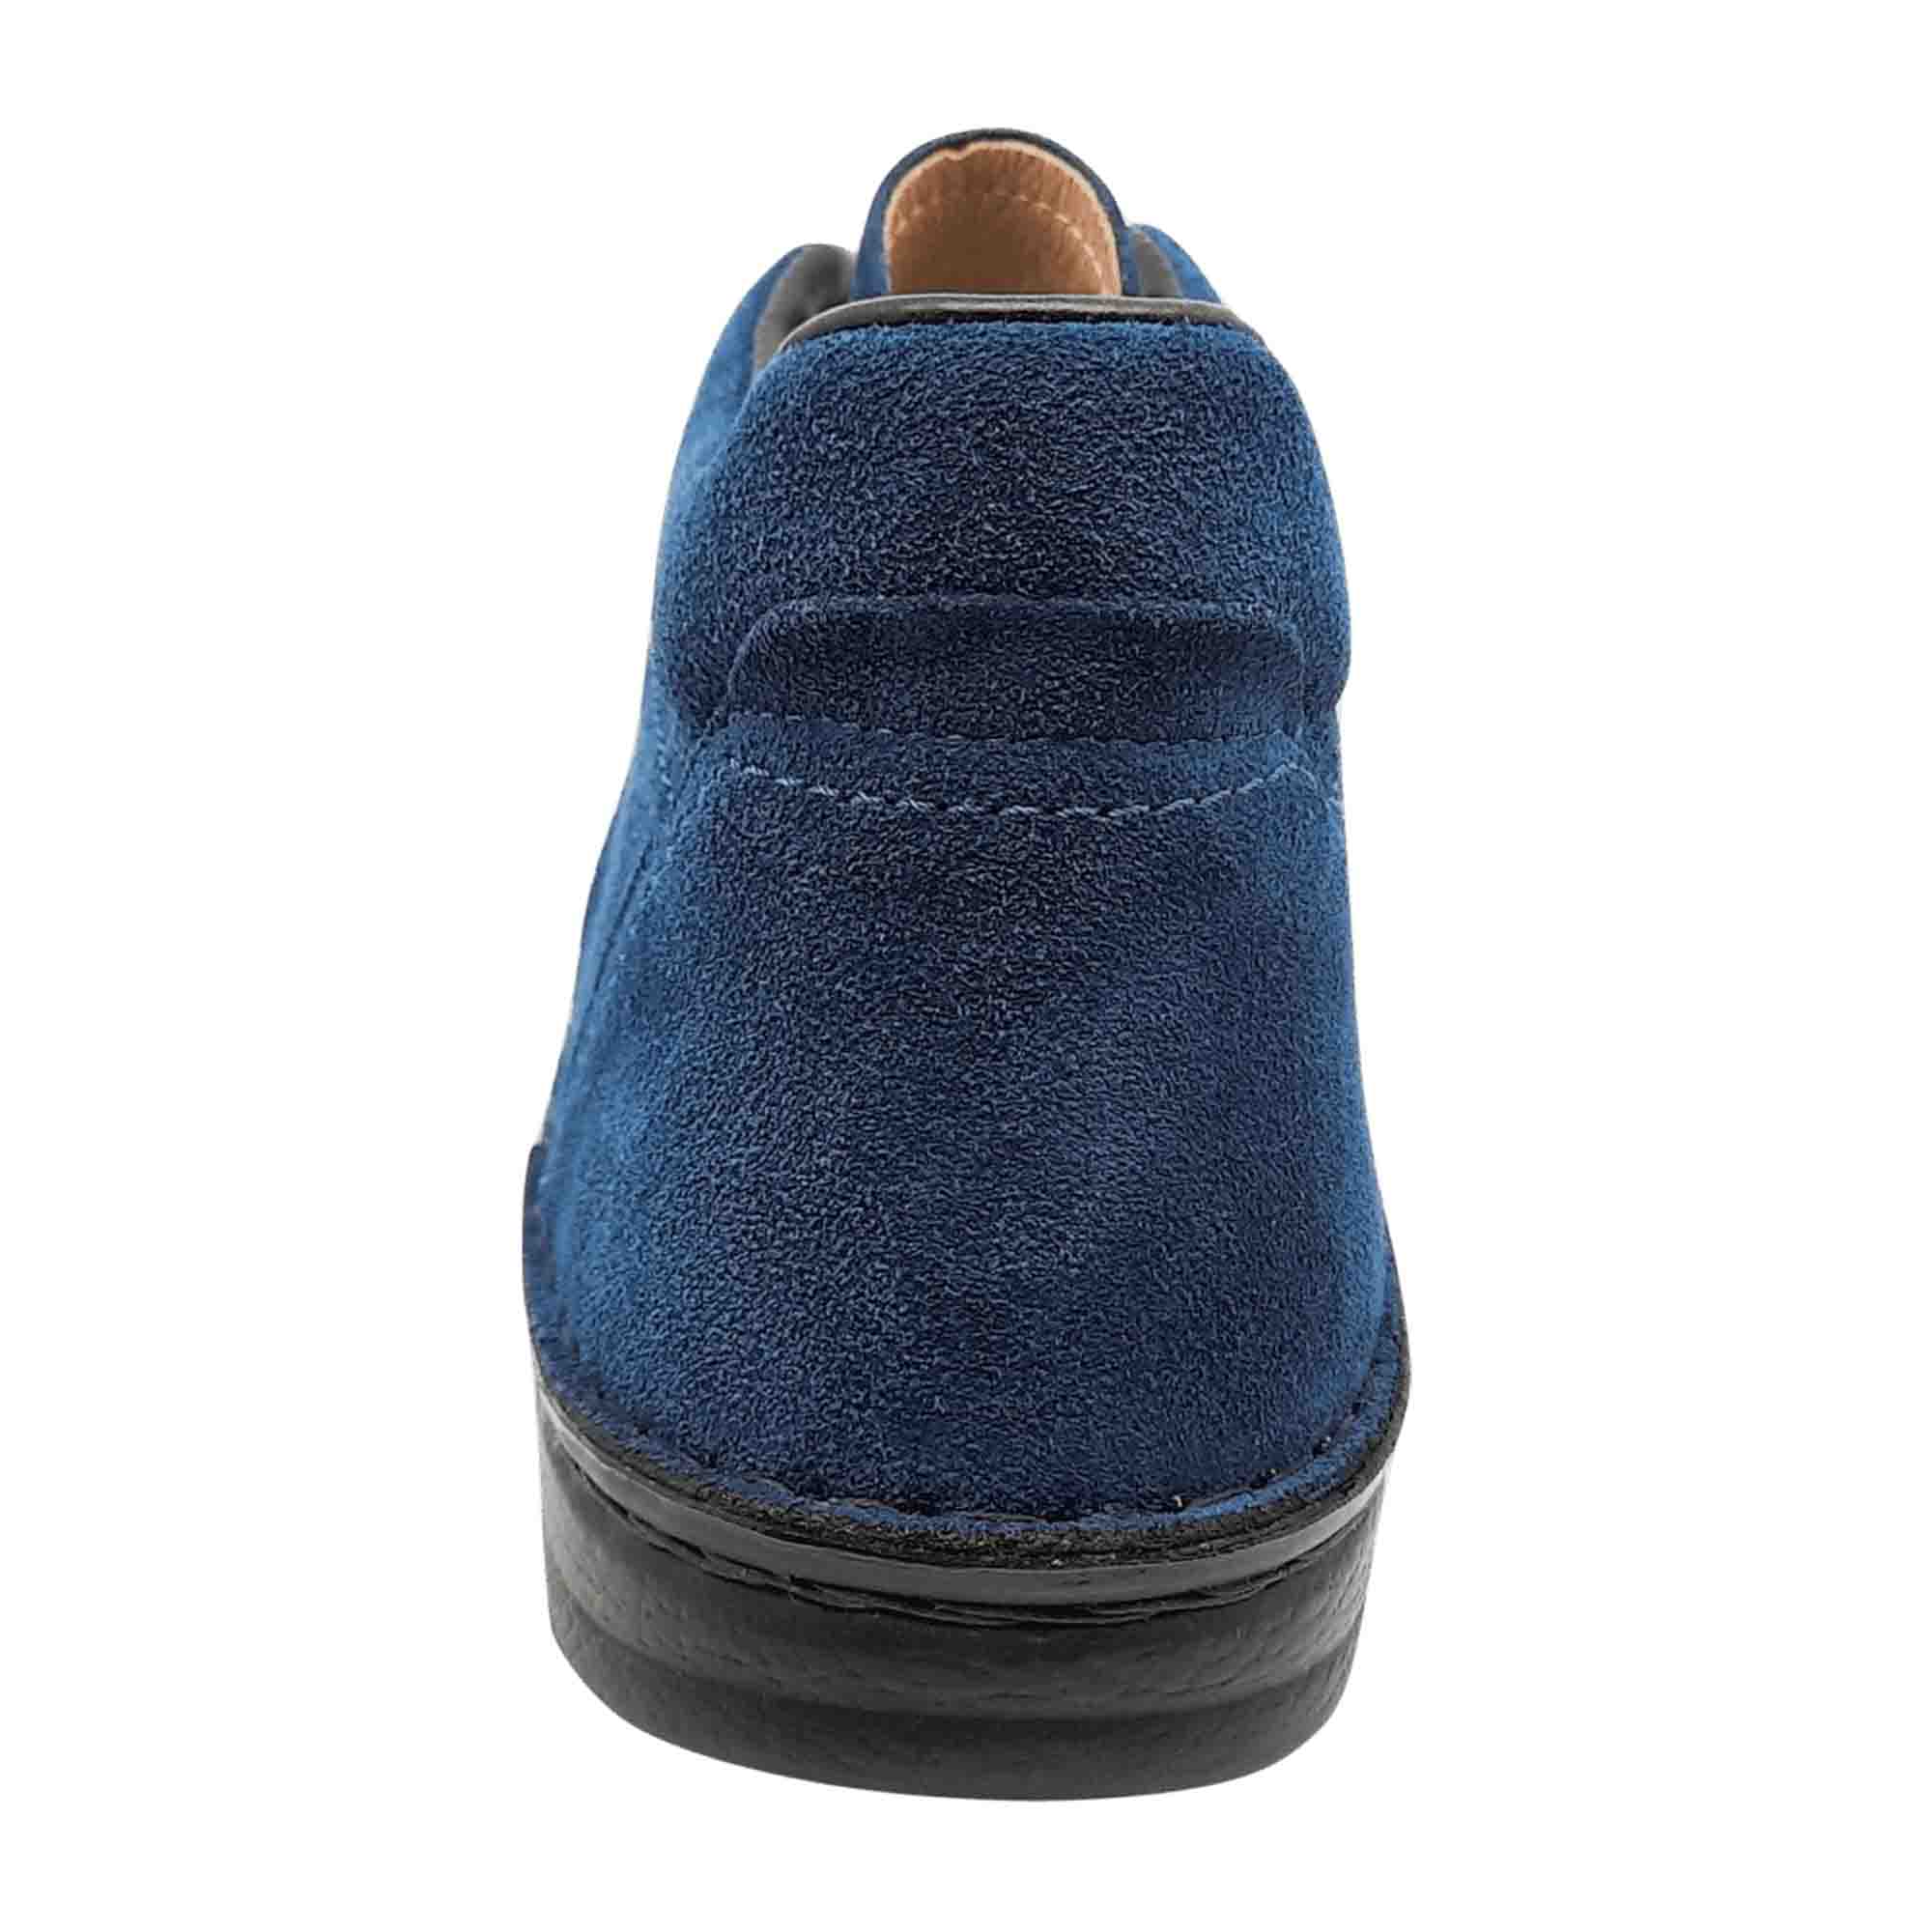 Finn Comfort Linz Petrol Men's Comfort Shoes - Stylish Turquoise Leather